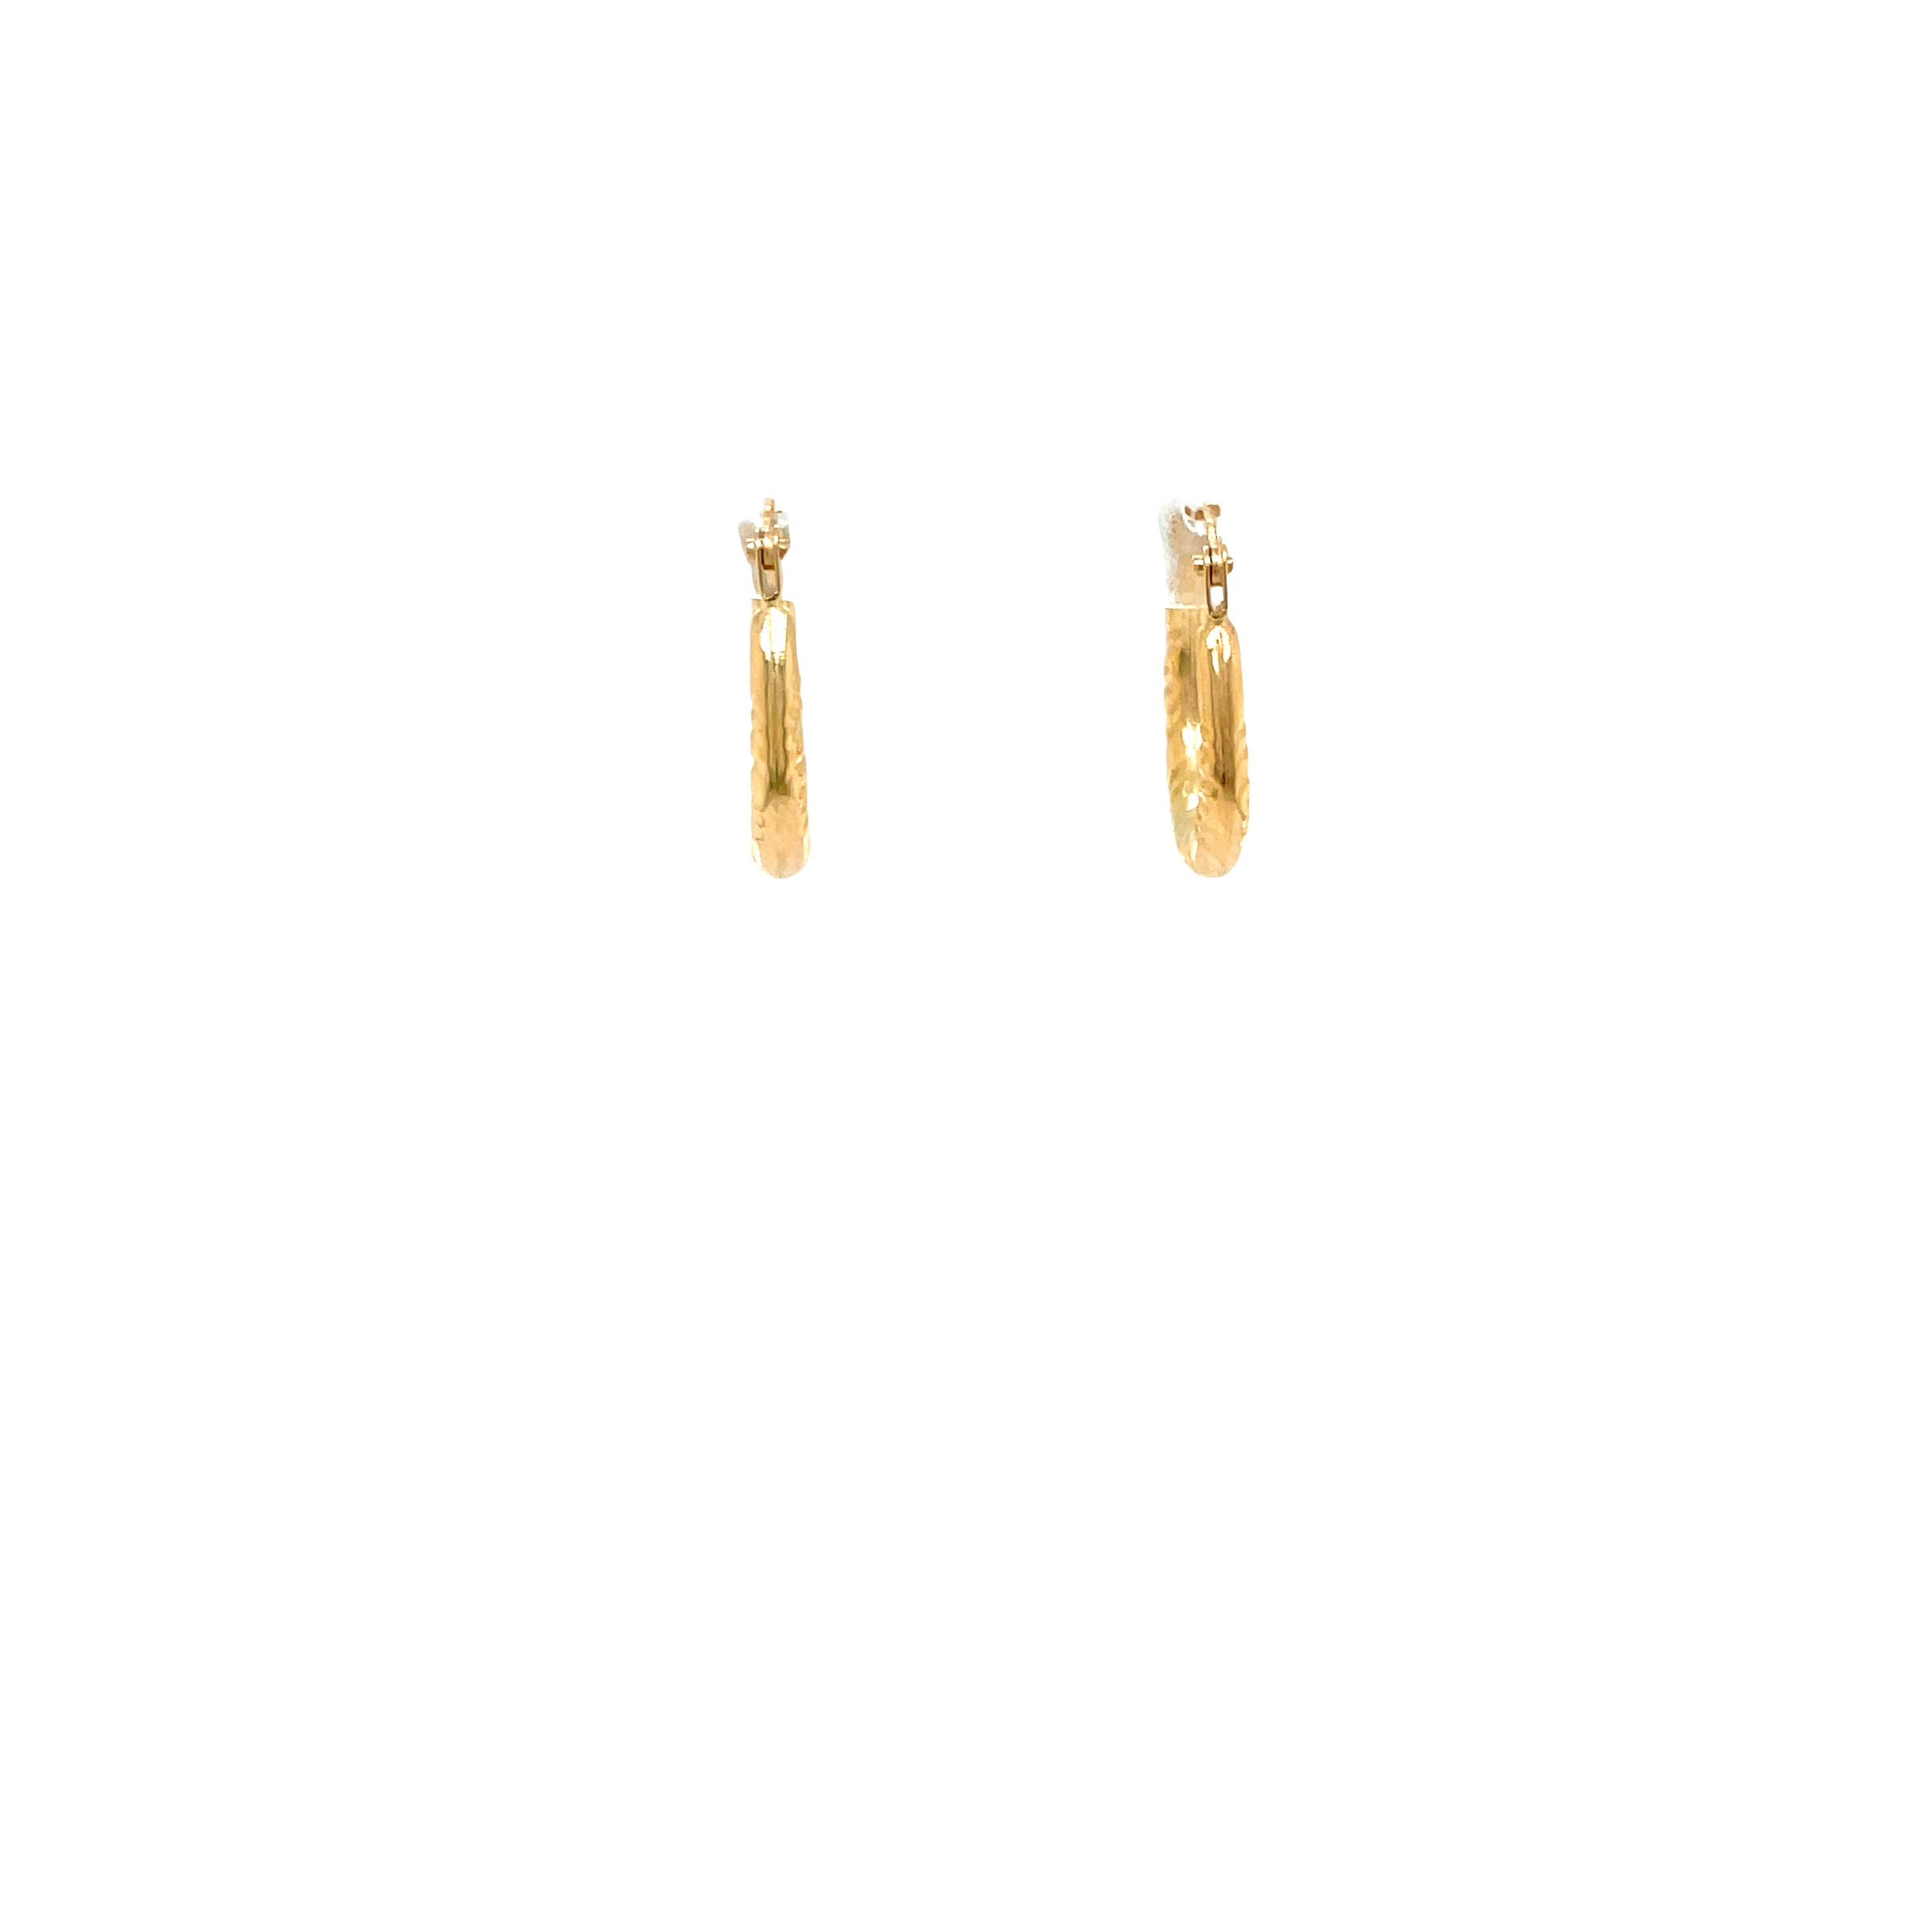 9ct Yellow Gold Horseshoe Shape Patterned Hoop Earrings